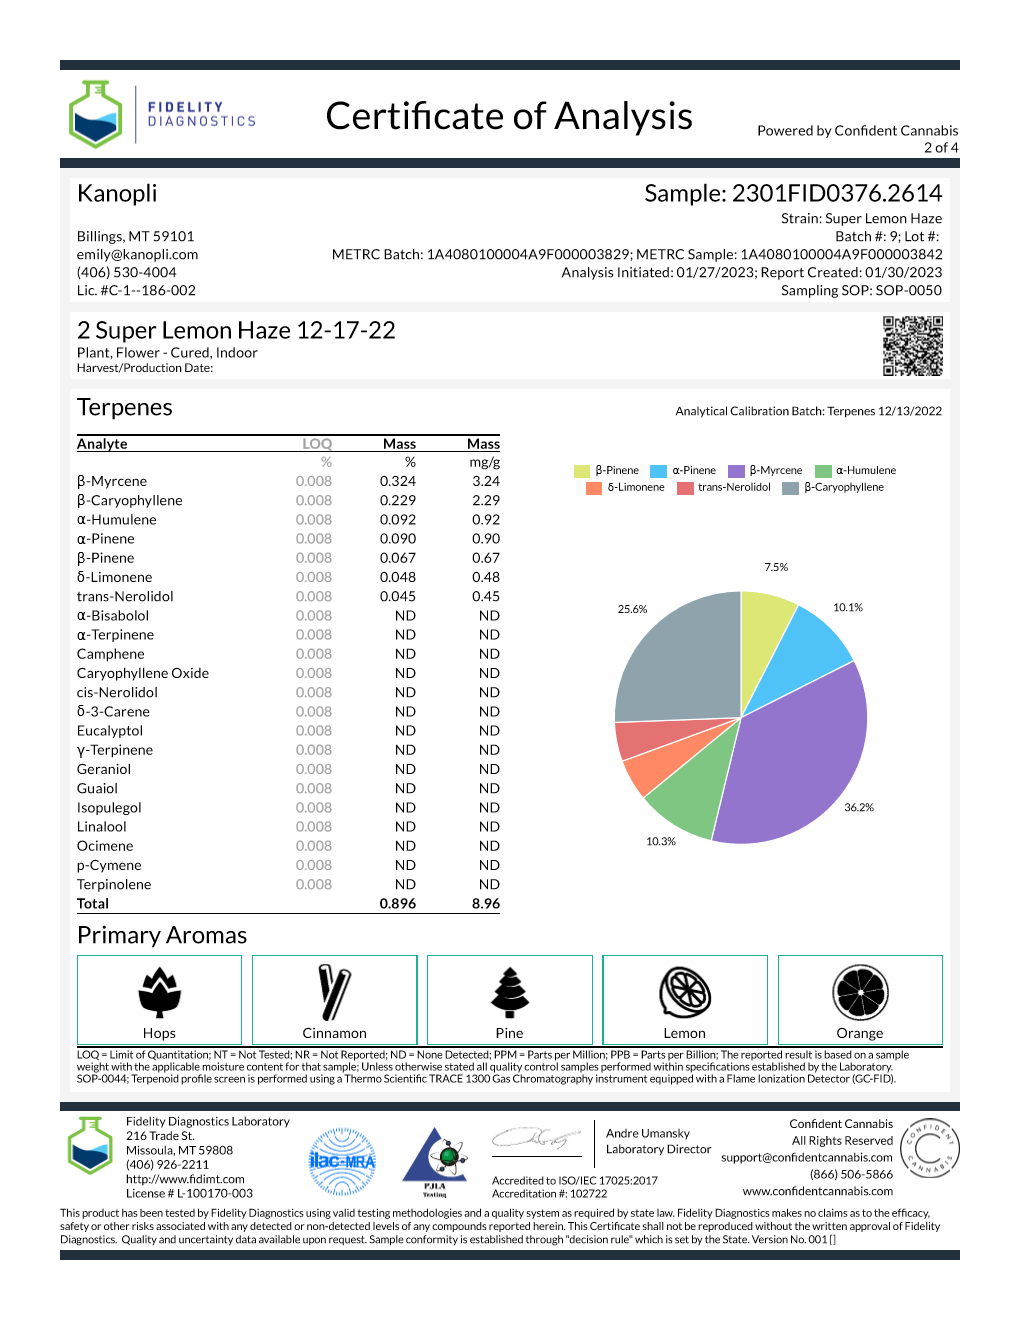 Super Lemon Haze - Sativa 22.27% THC (Dec. 2022) MEDICAL